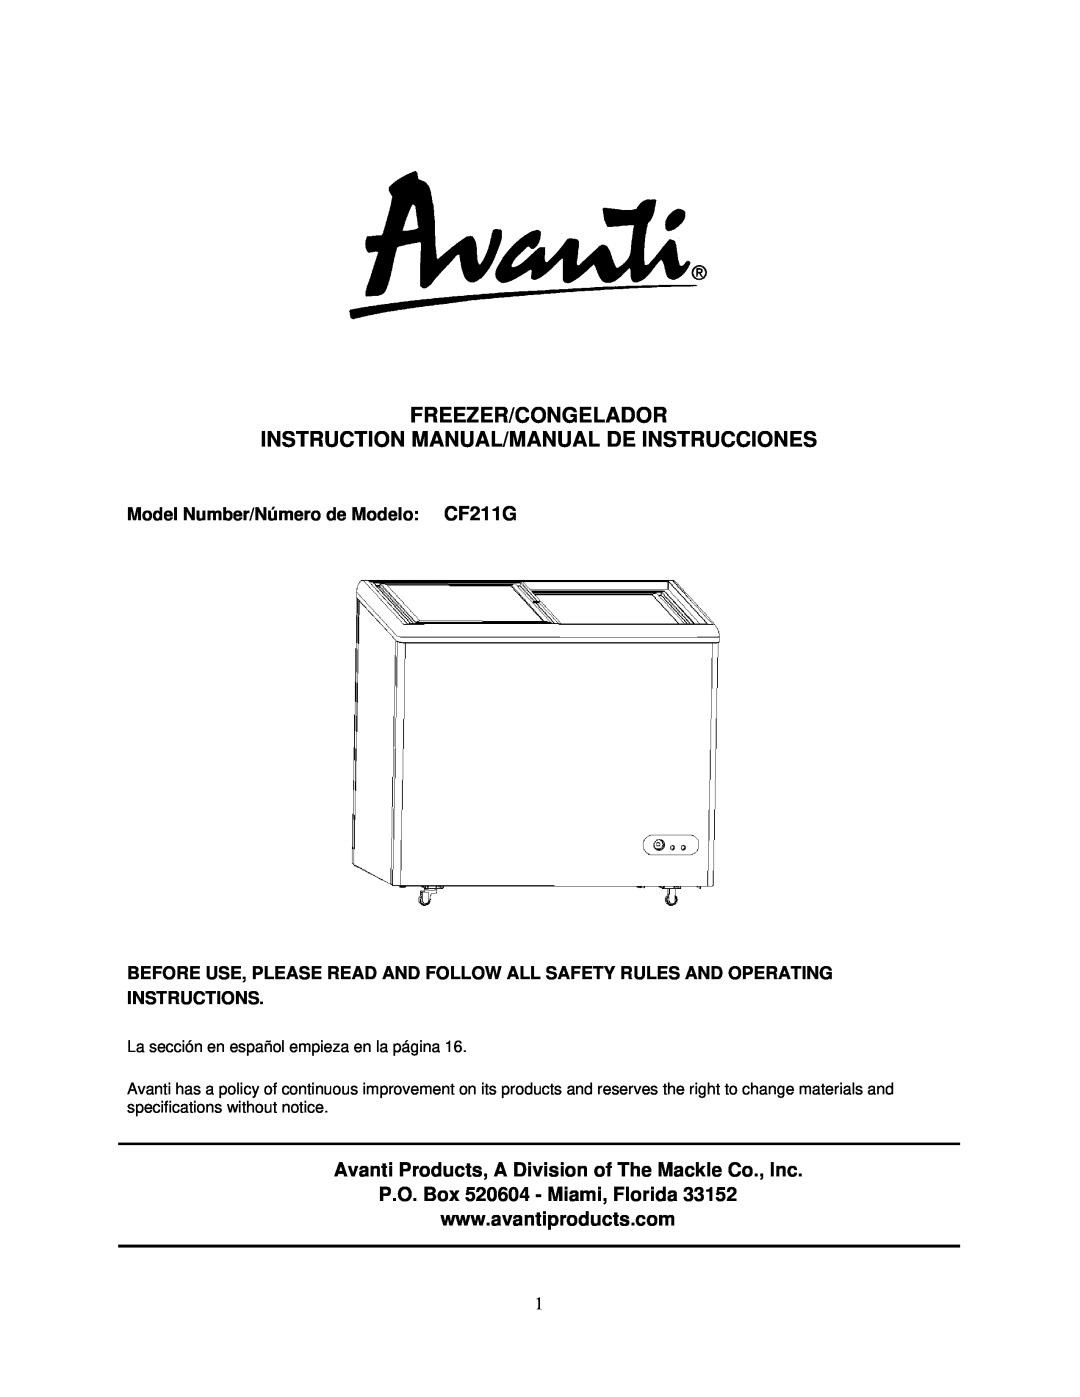 Avanti CF211G instruction manual Freezer/Congelador, P.O. Box 520604 - Miami, Florida 